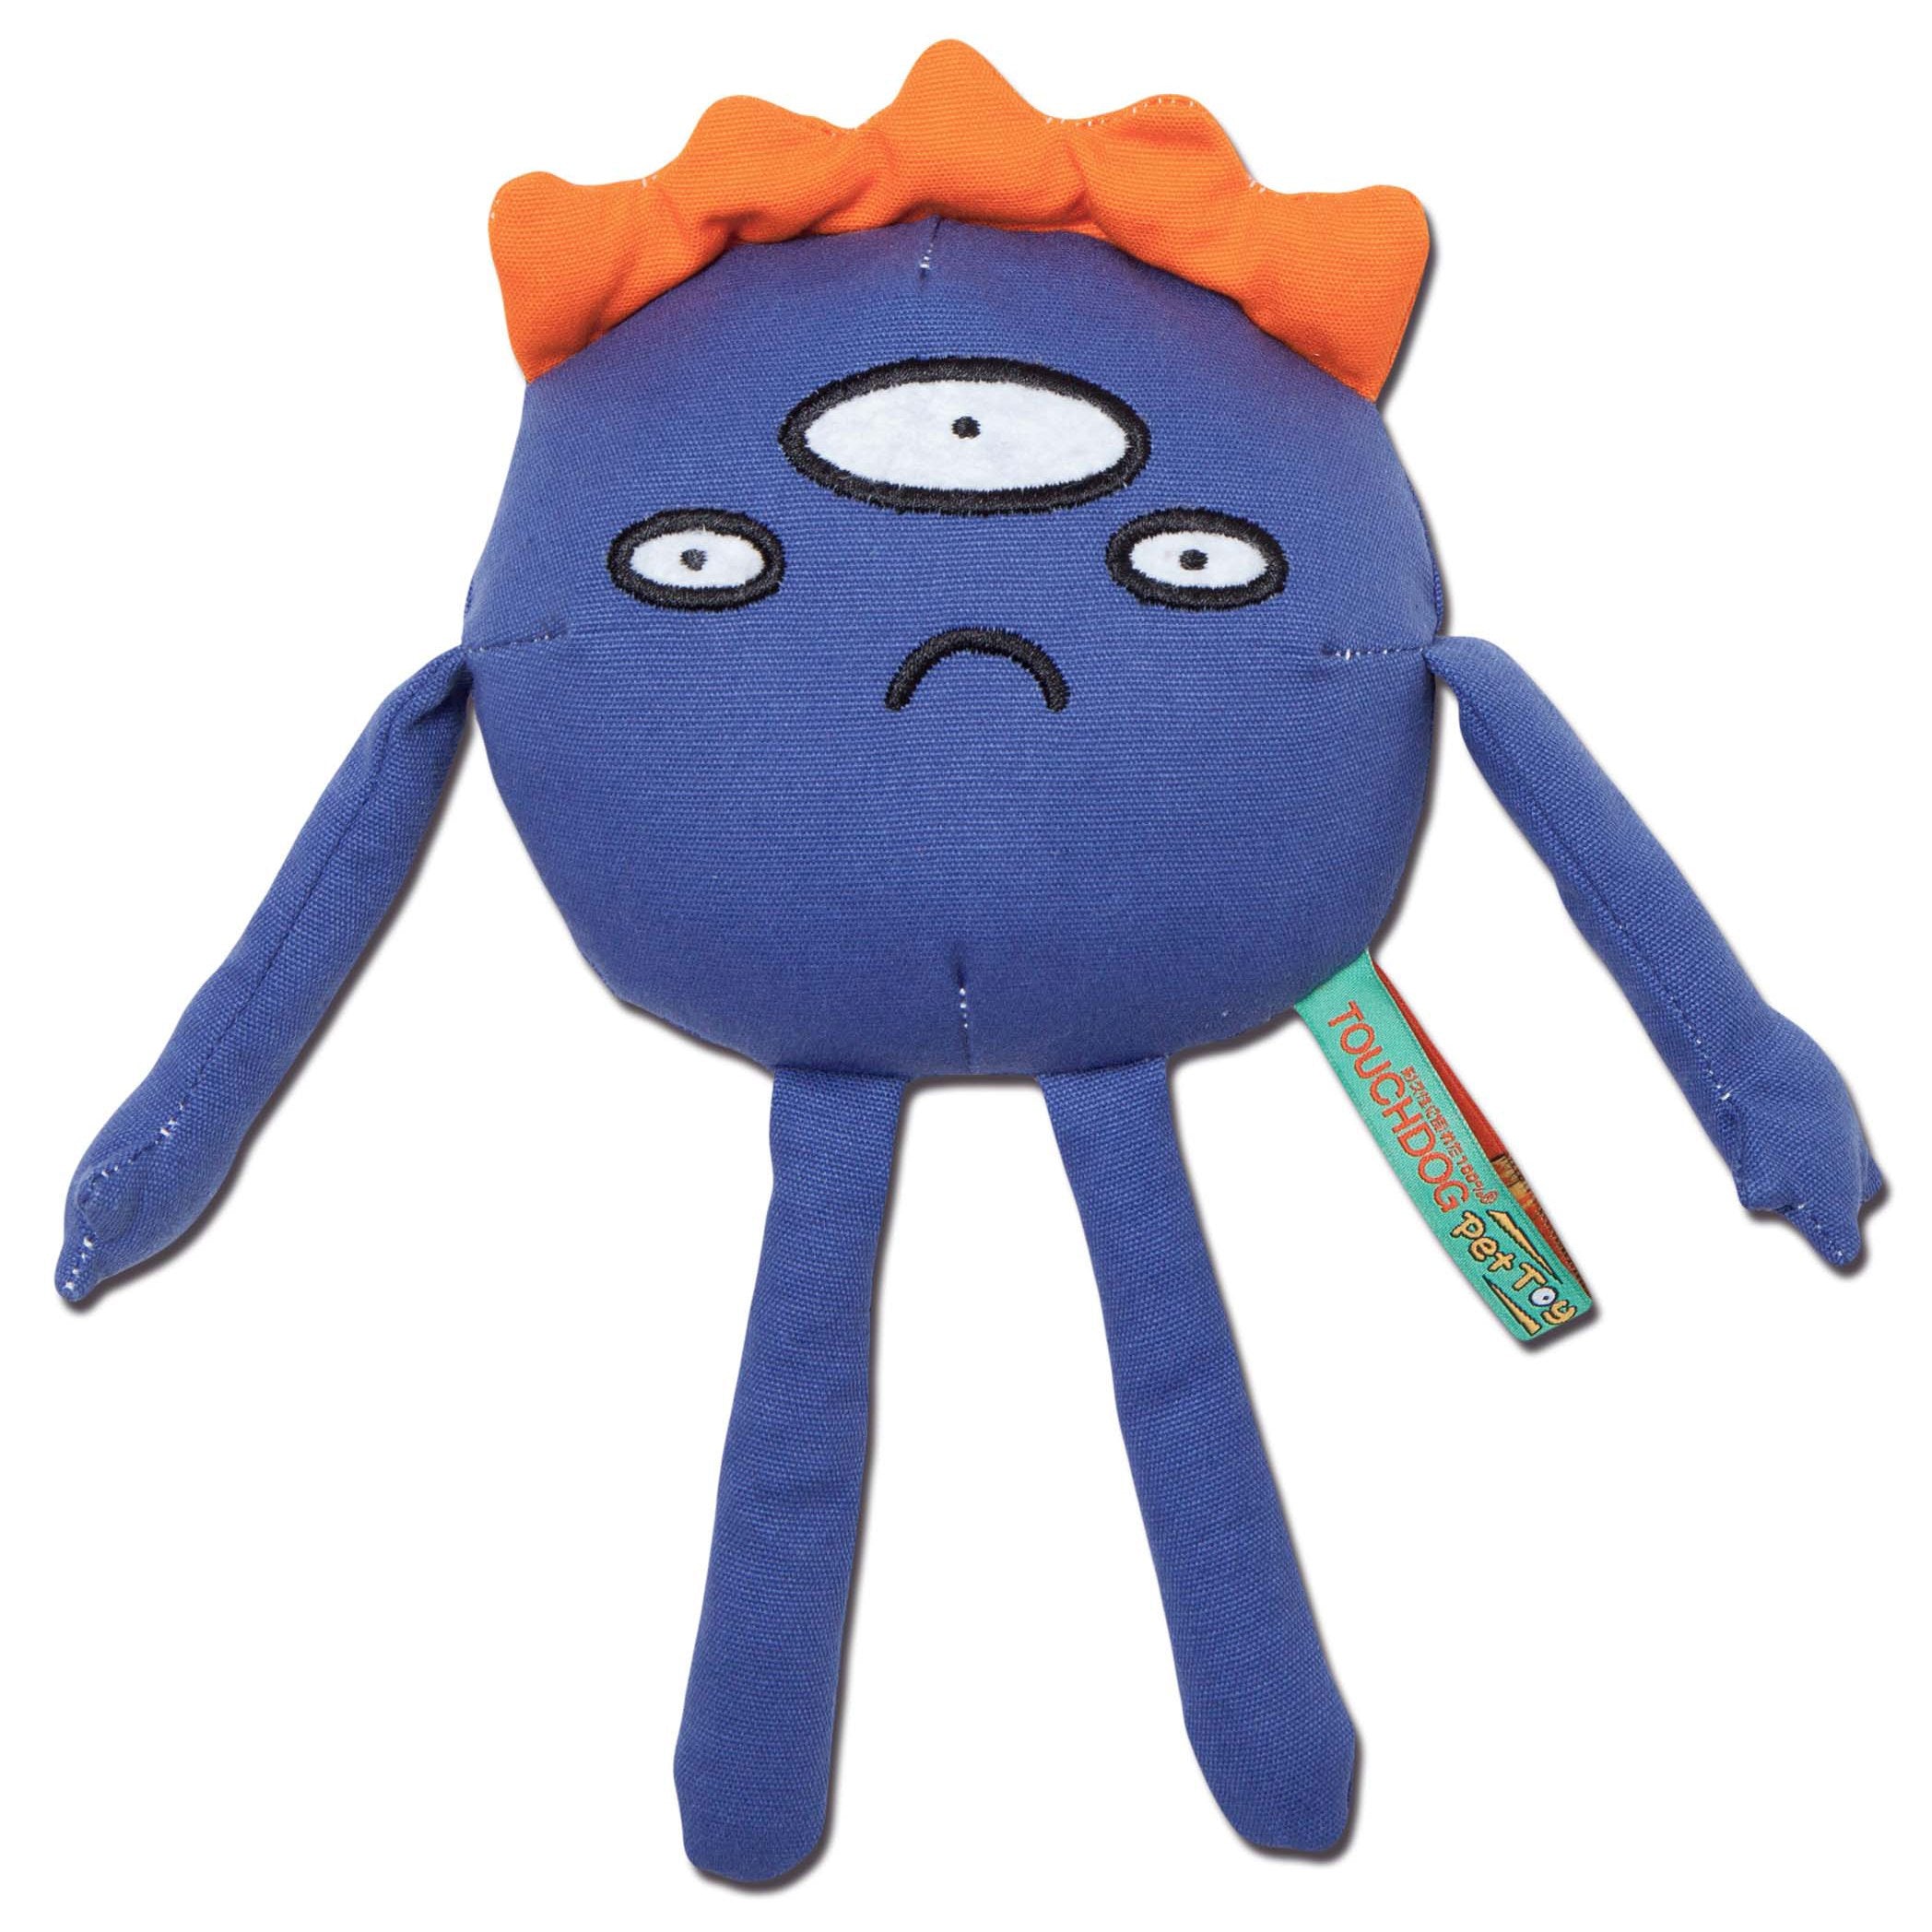 Touchdog Cartoon Alien Monster Plush Dog Toy - Blue